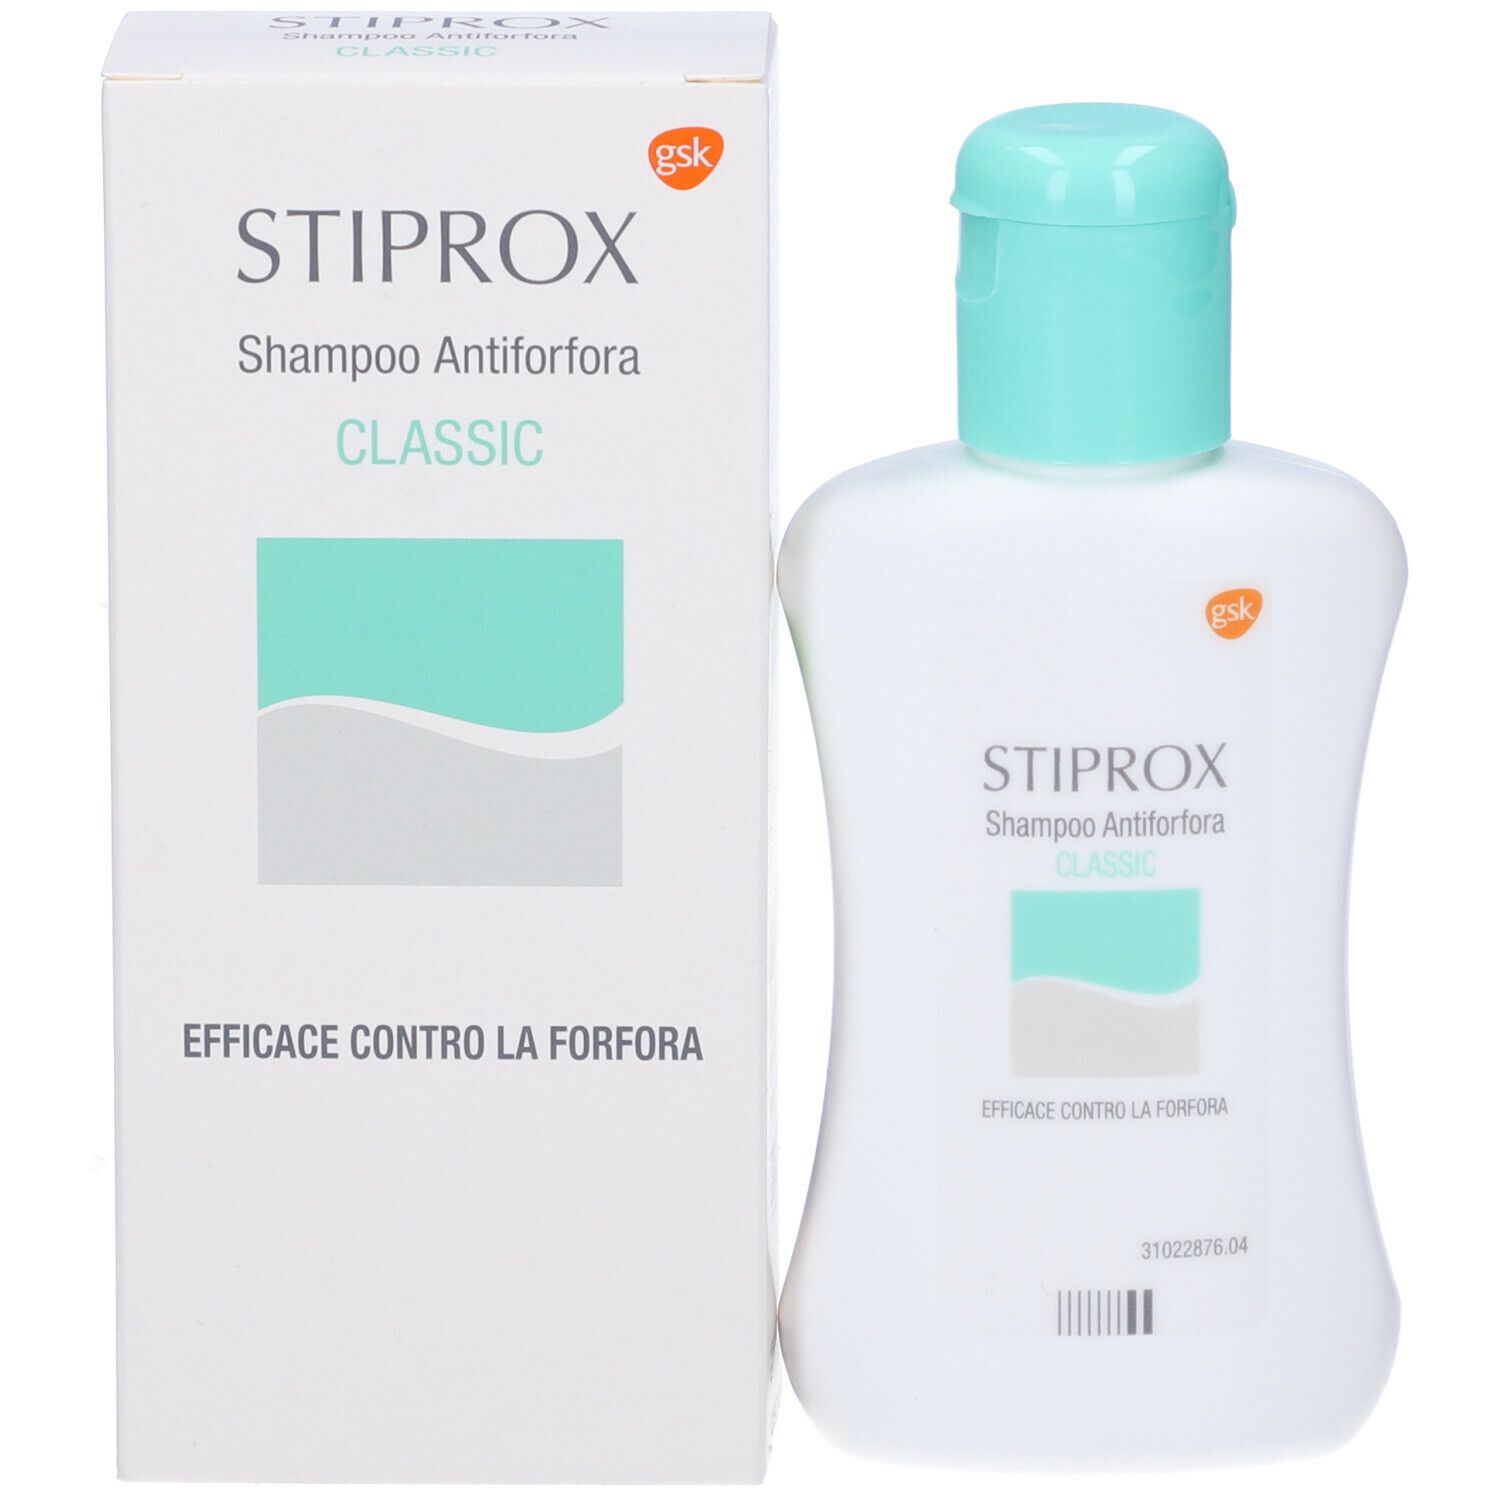 STIPROX® Shampoo Antiforfora Classic